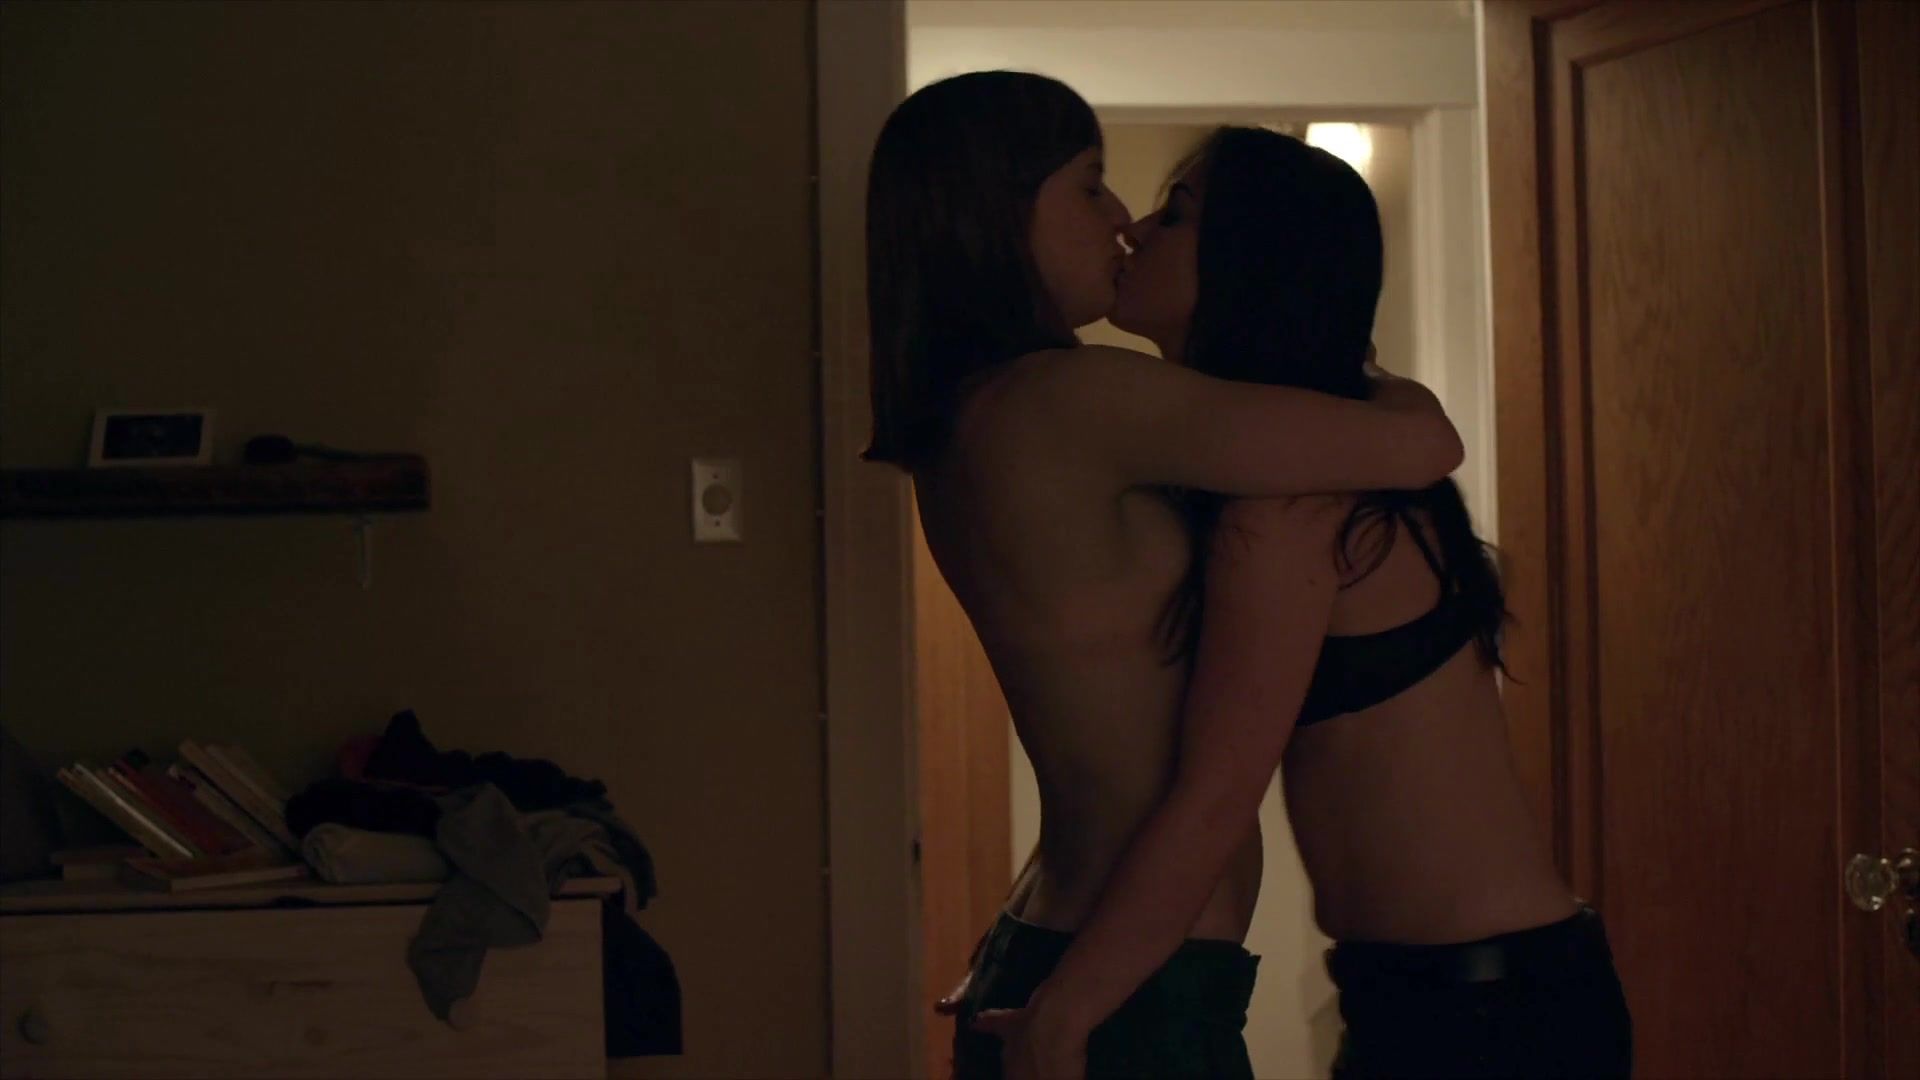 Porno 18 Lesbian short scene Alexa-Jeanne Dube, Kimberly Laferriere Nude - Feminin_Feminin s01e05 (2014) javx - 2